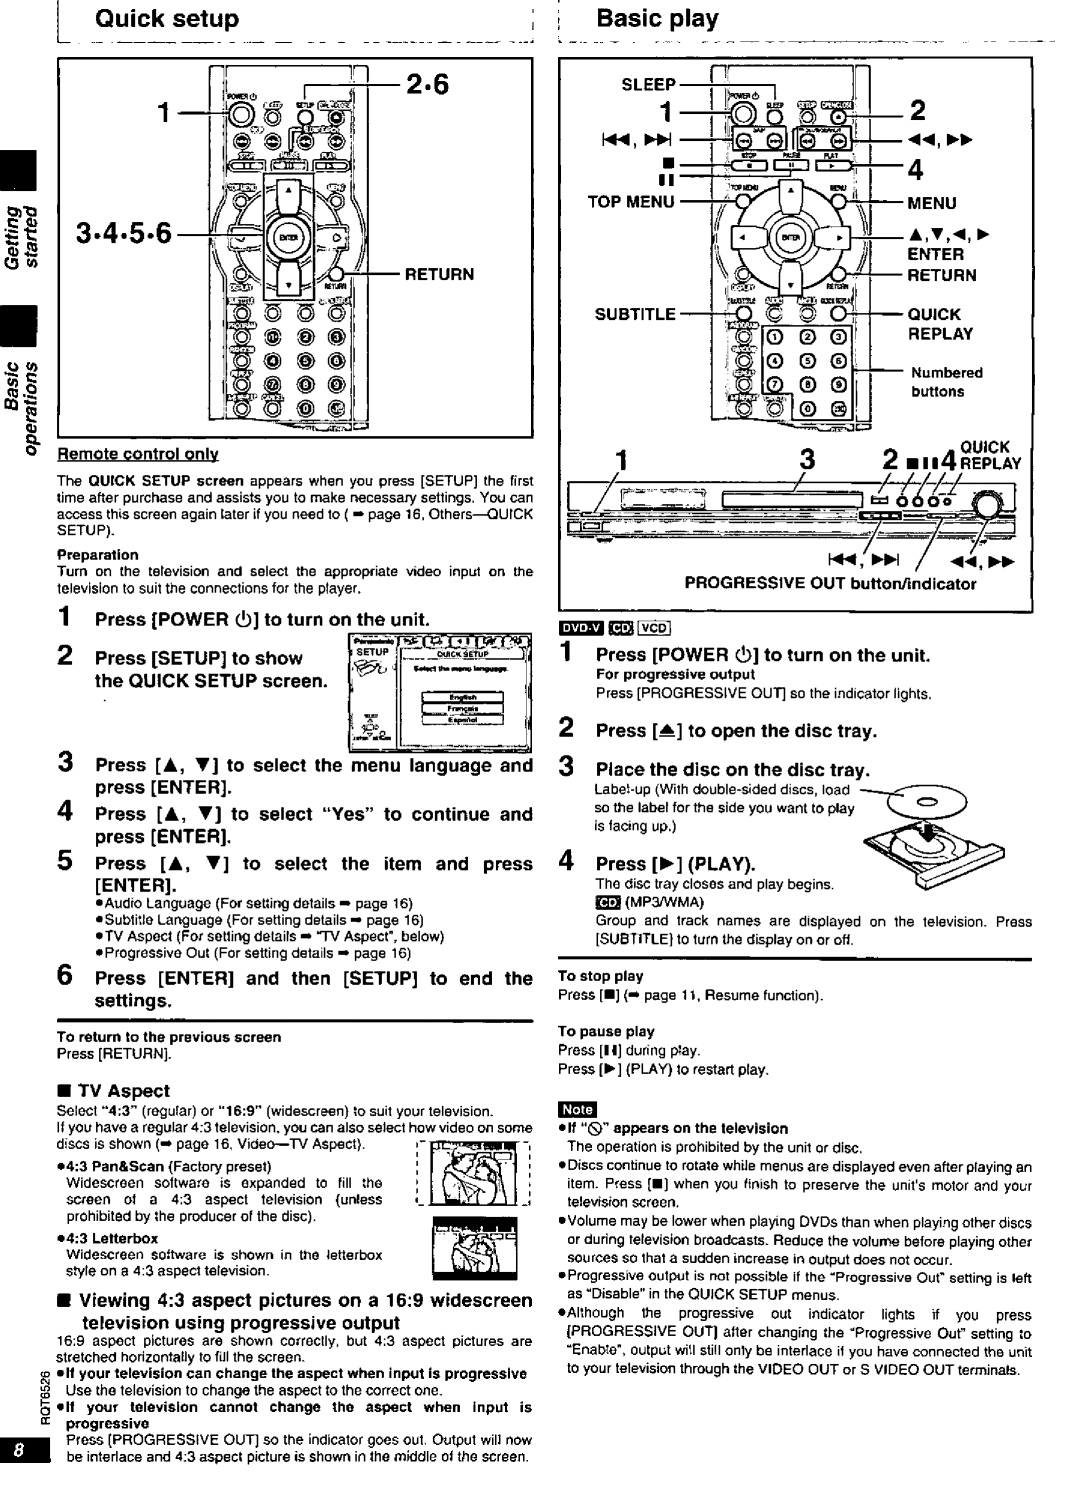 Panasonic DVD-RP62 manual 